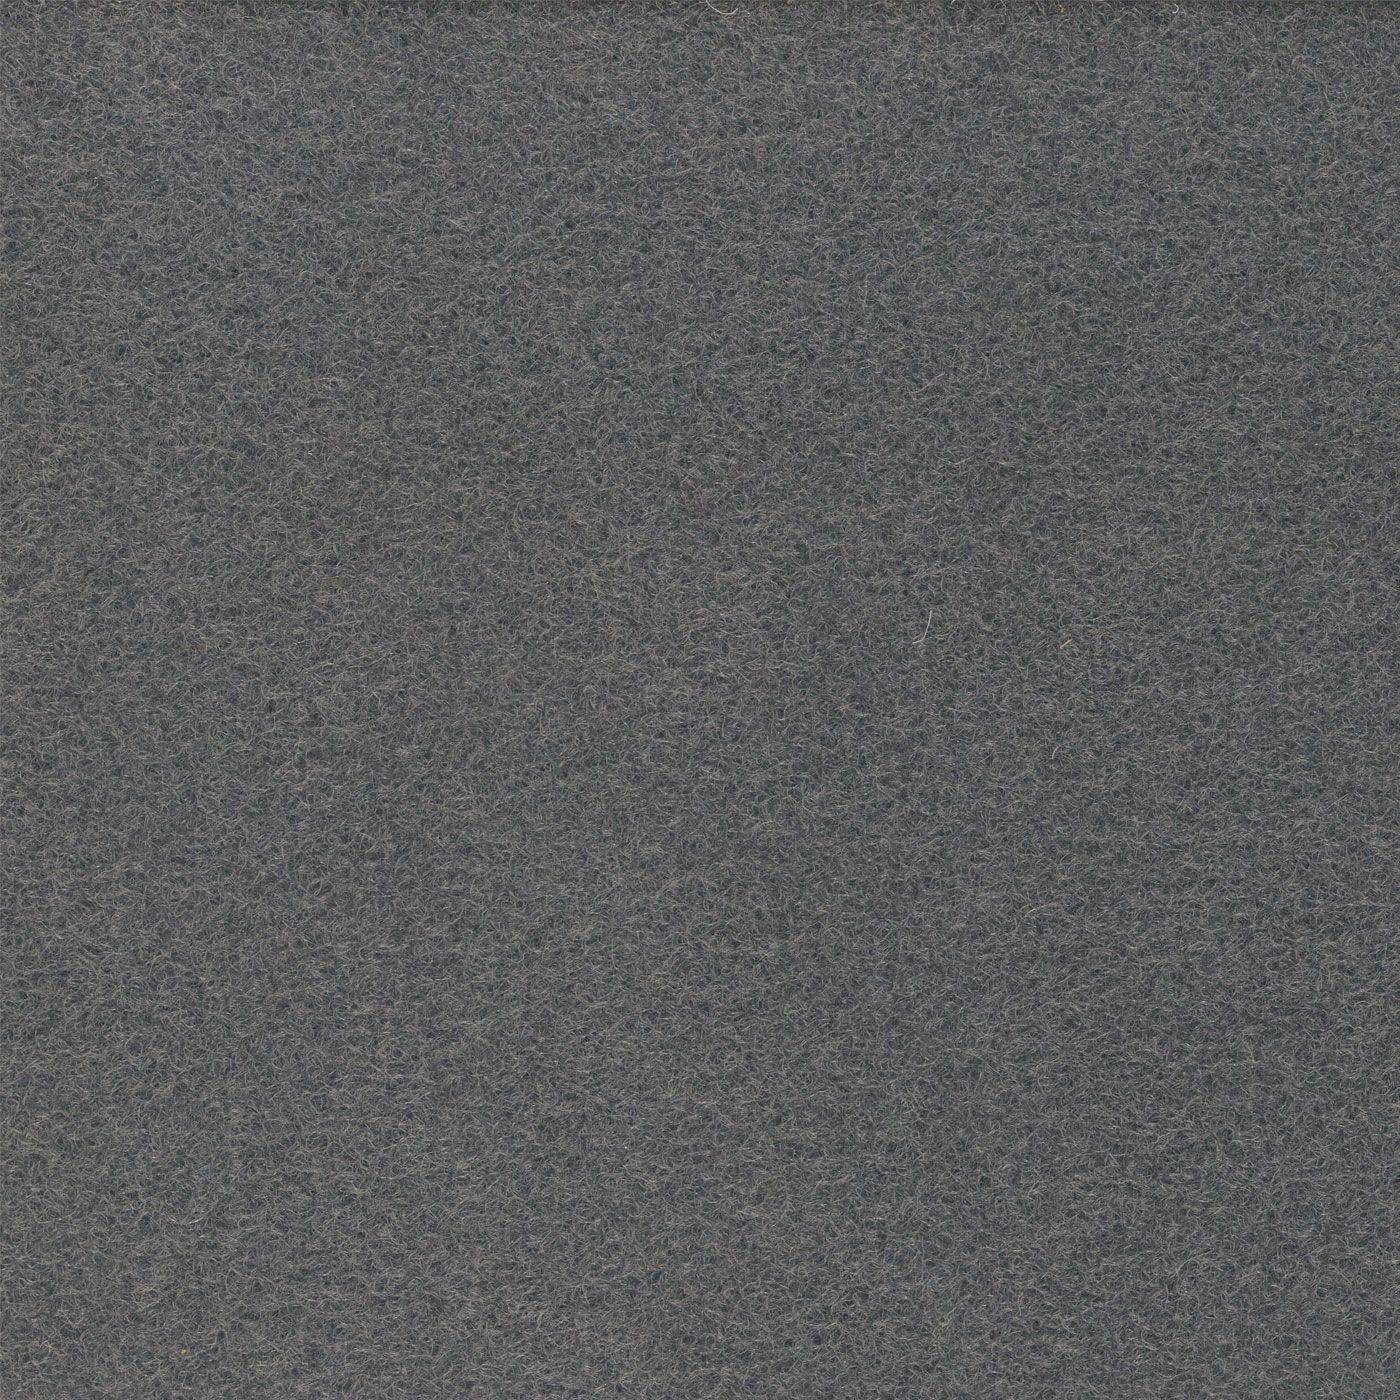 Rawson Carpet Felkirk Dark Grey CM123